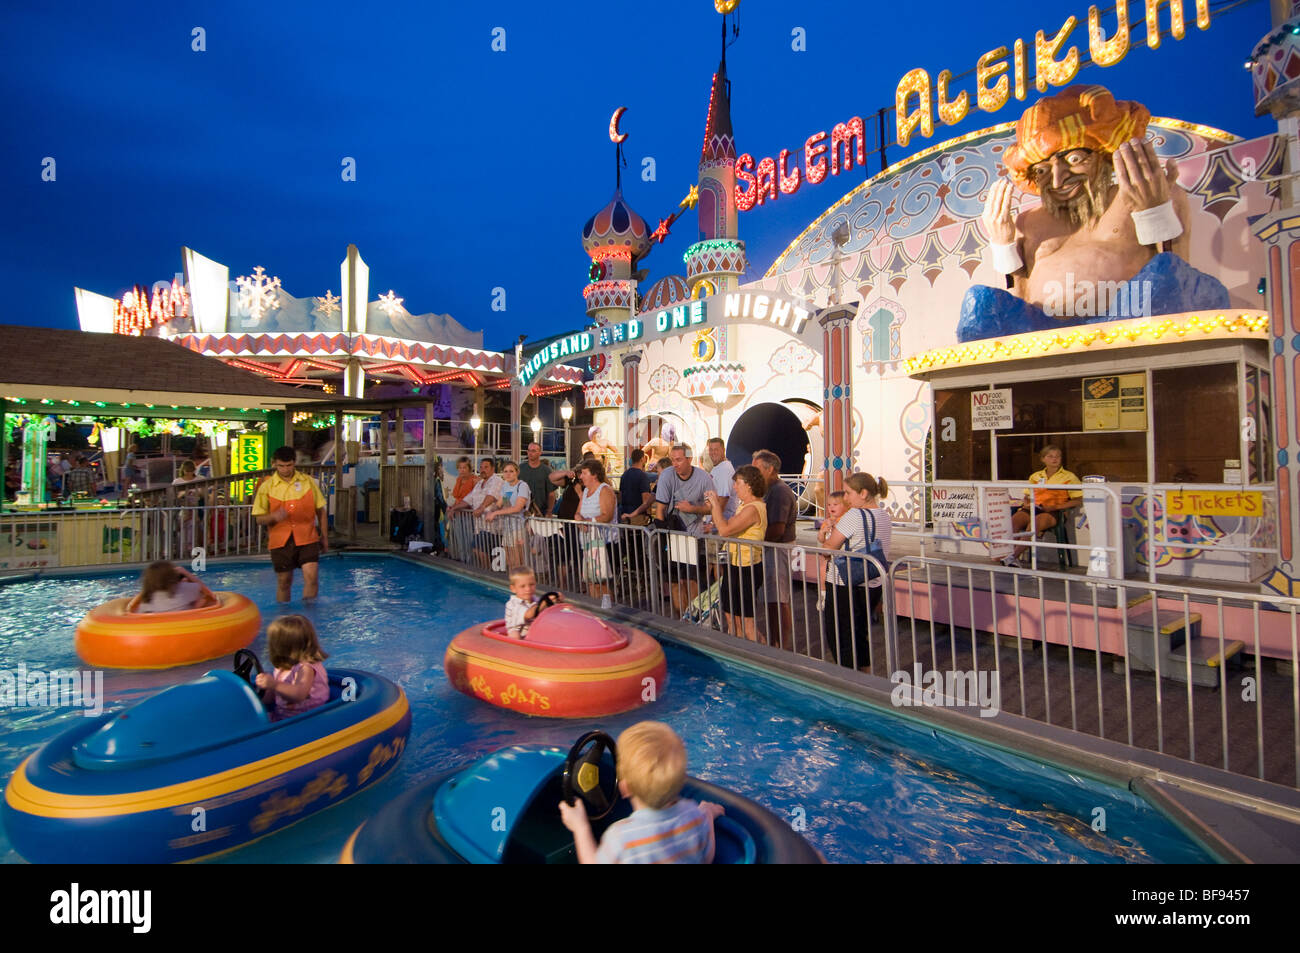 Ocean City Maryland Trimpers amusement park Stock Photo Alamy